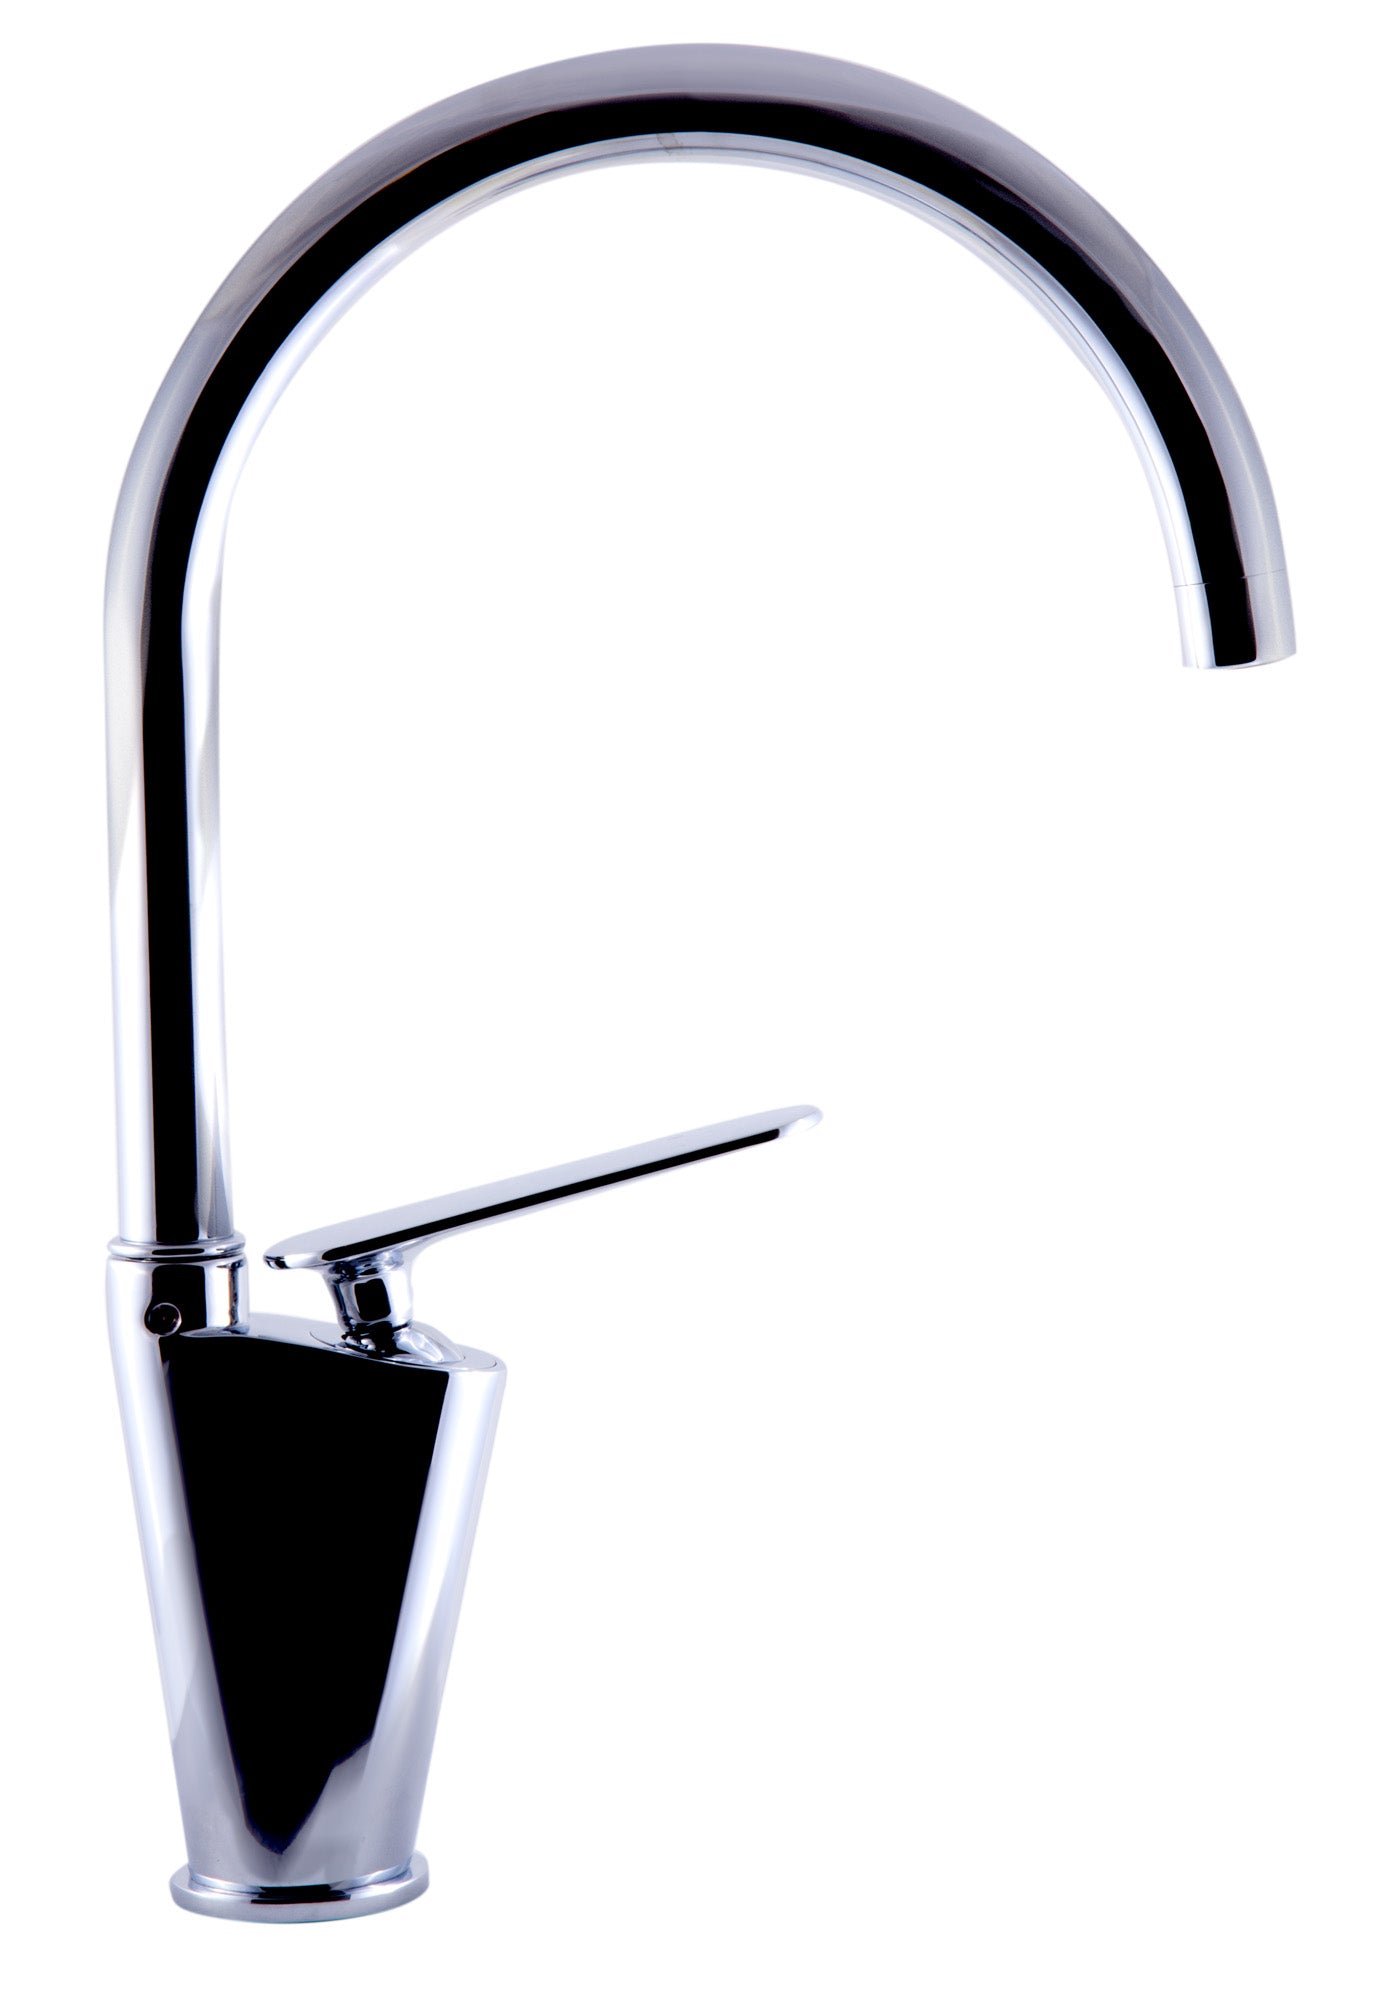 ALFI Brand - Polished Chrome Gooseneck Single Hole Bathroom Faucet | AB3600-PC